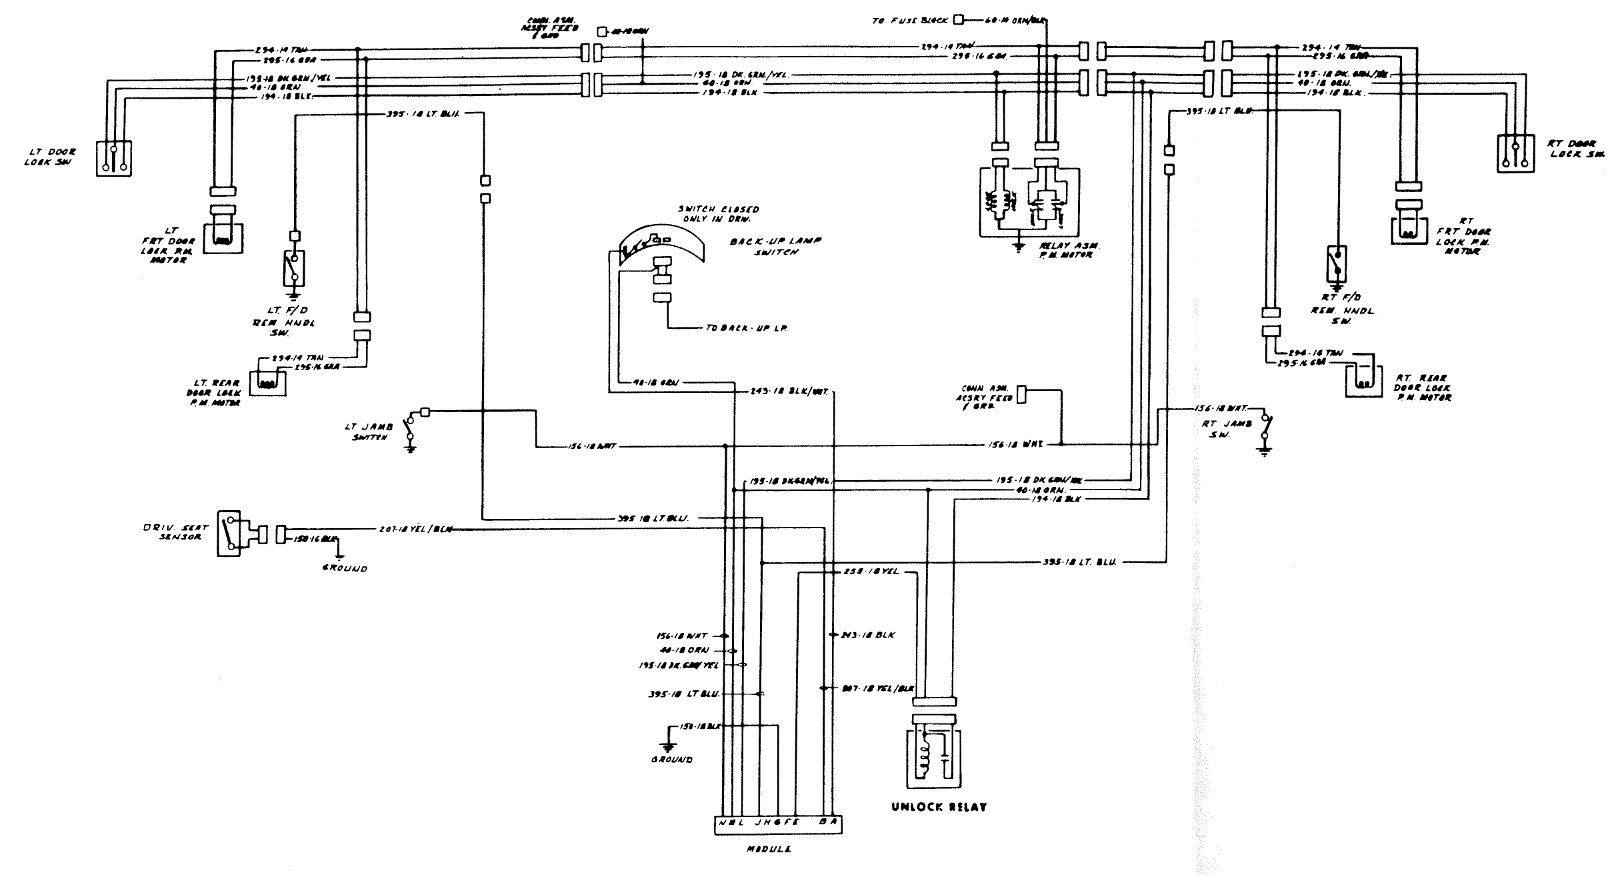 Power Door Locks Wiring Circuit (Automatic). 1977